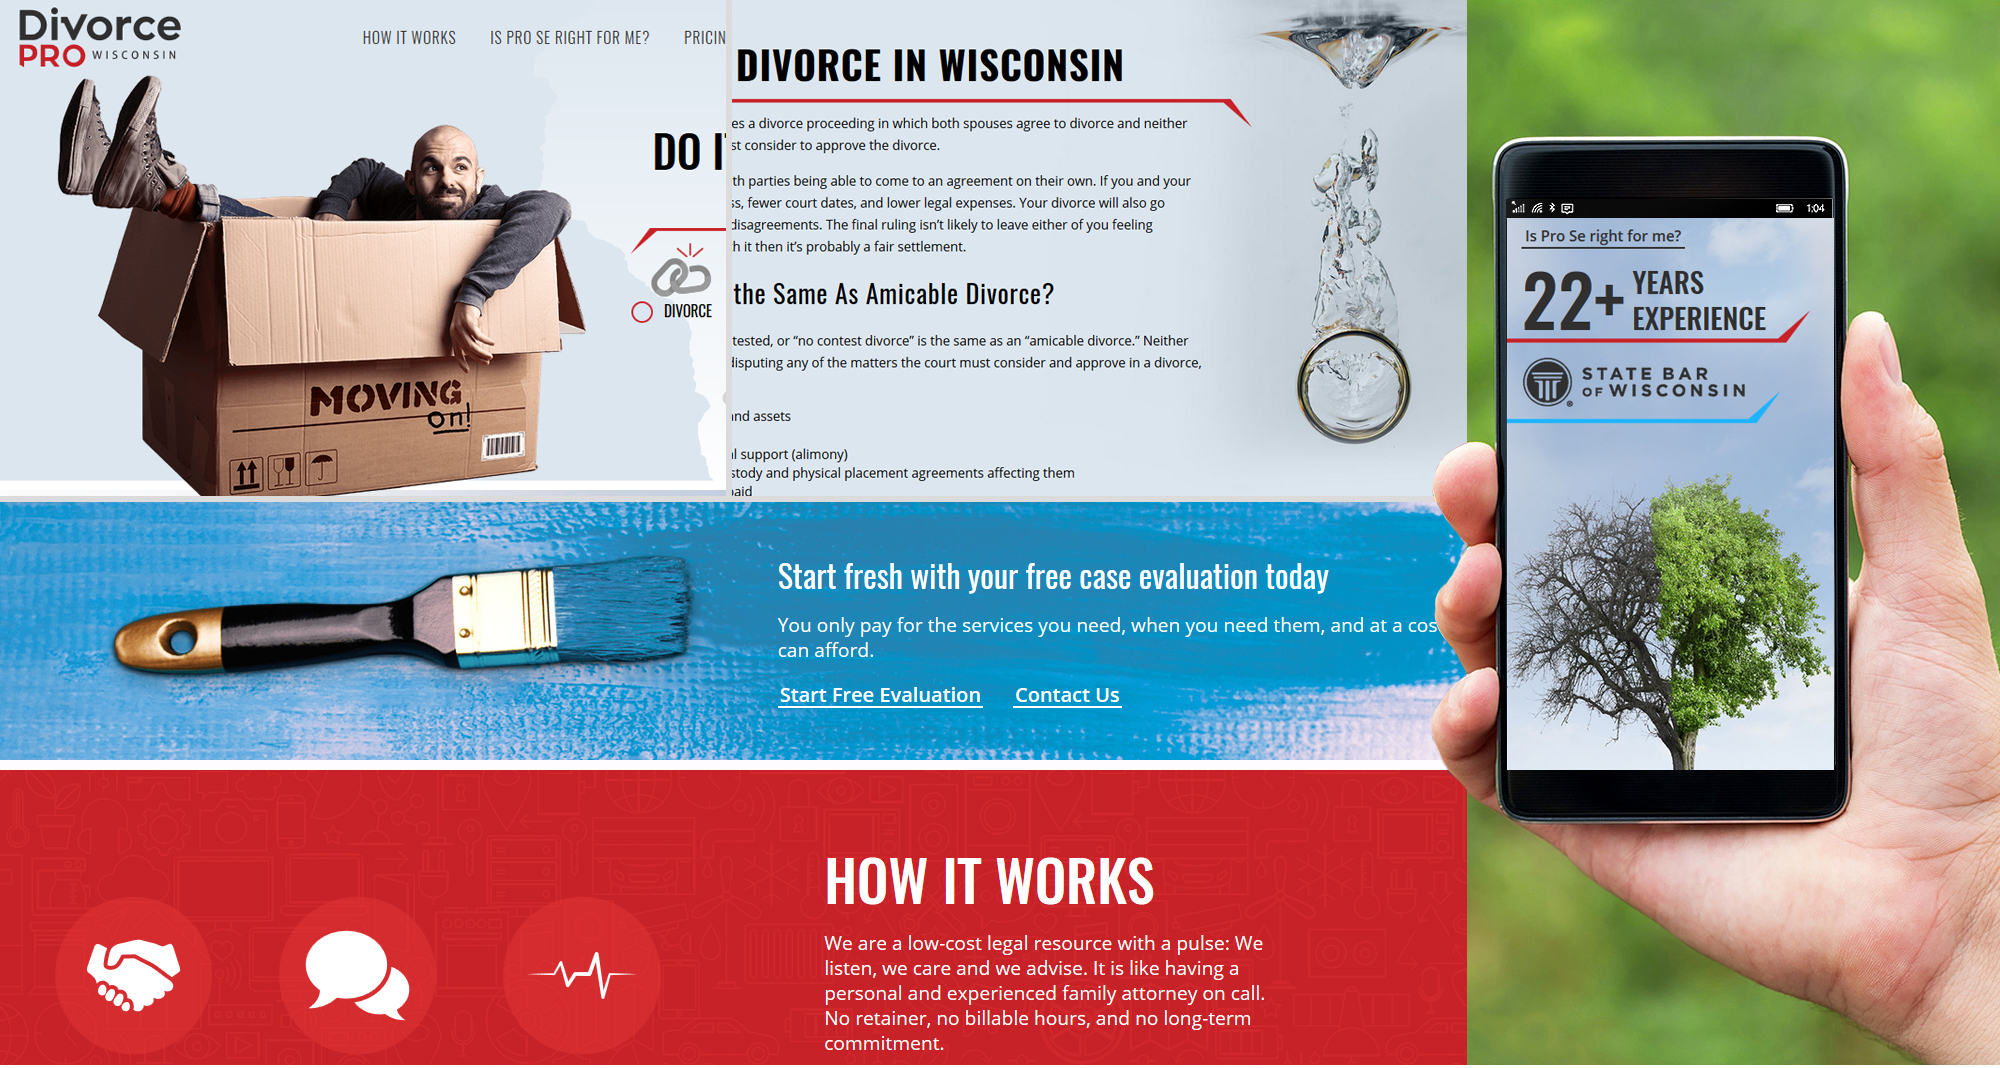 Milwaukee web marketing for Divorce Pro Wisconsin